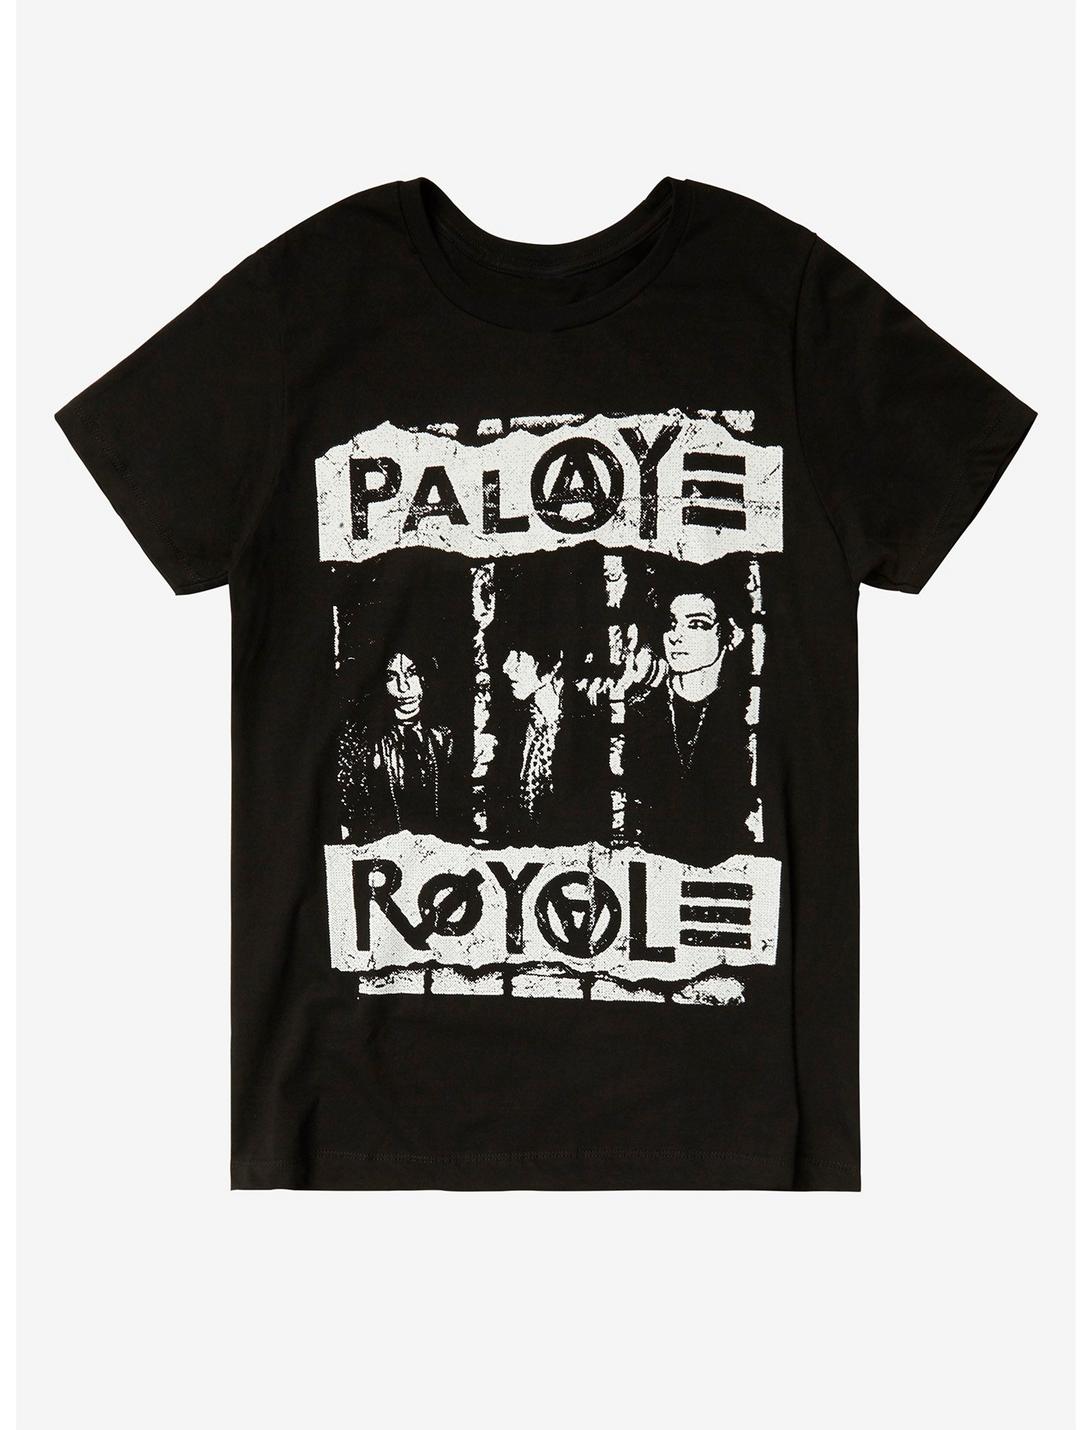 Palaye Royale Black & White Group Photo T-Shirt, BLACK, hi-res